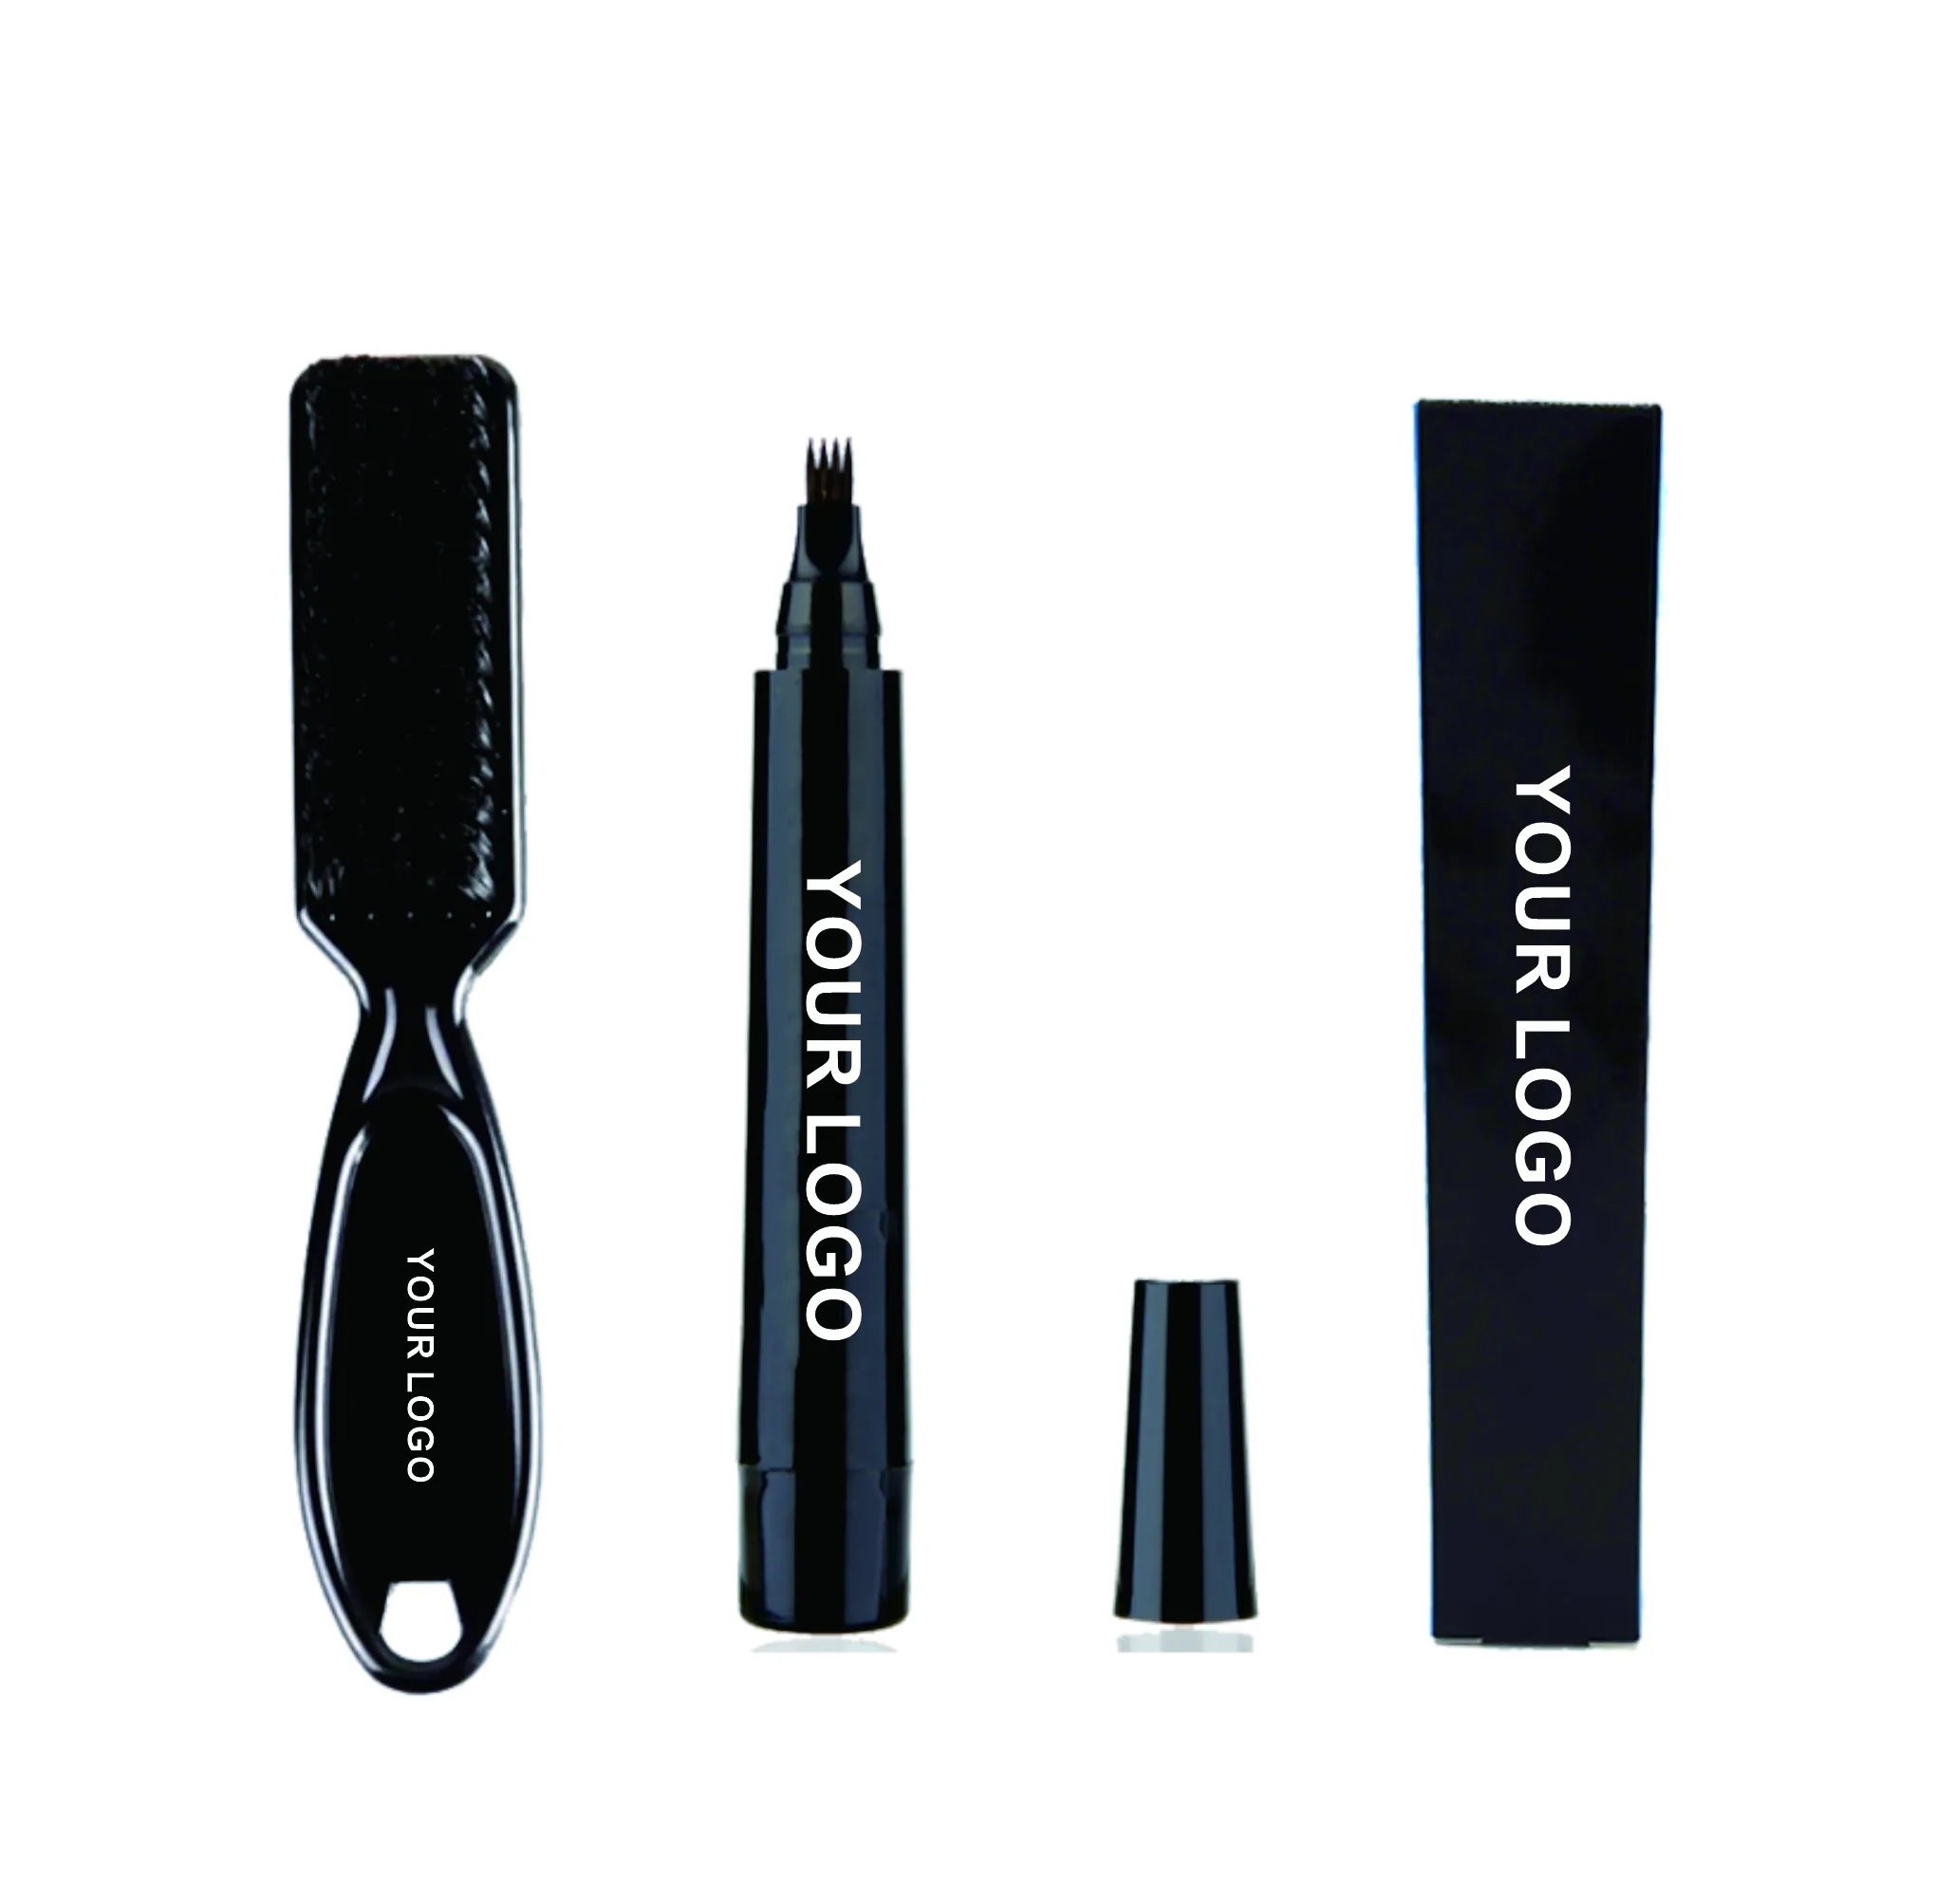 OEM Low Moq Men Private Label Waterproof Beard Filling Pen Kit With Brush